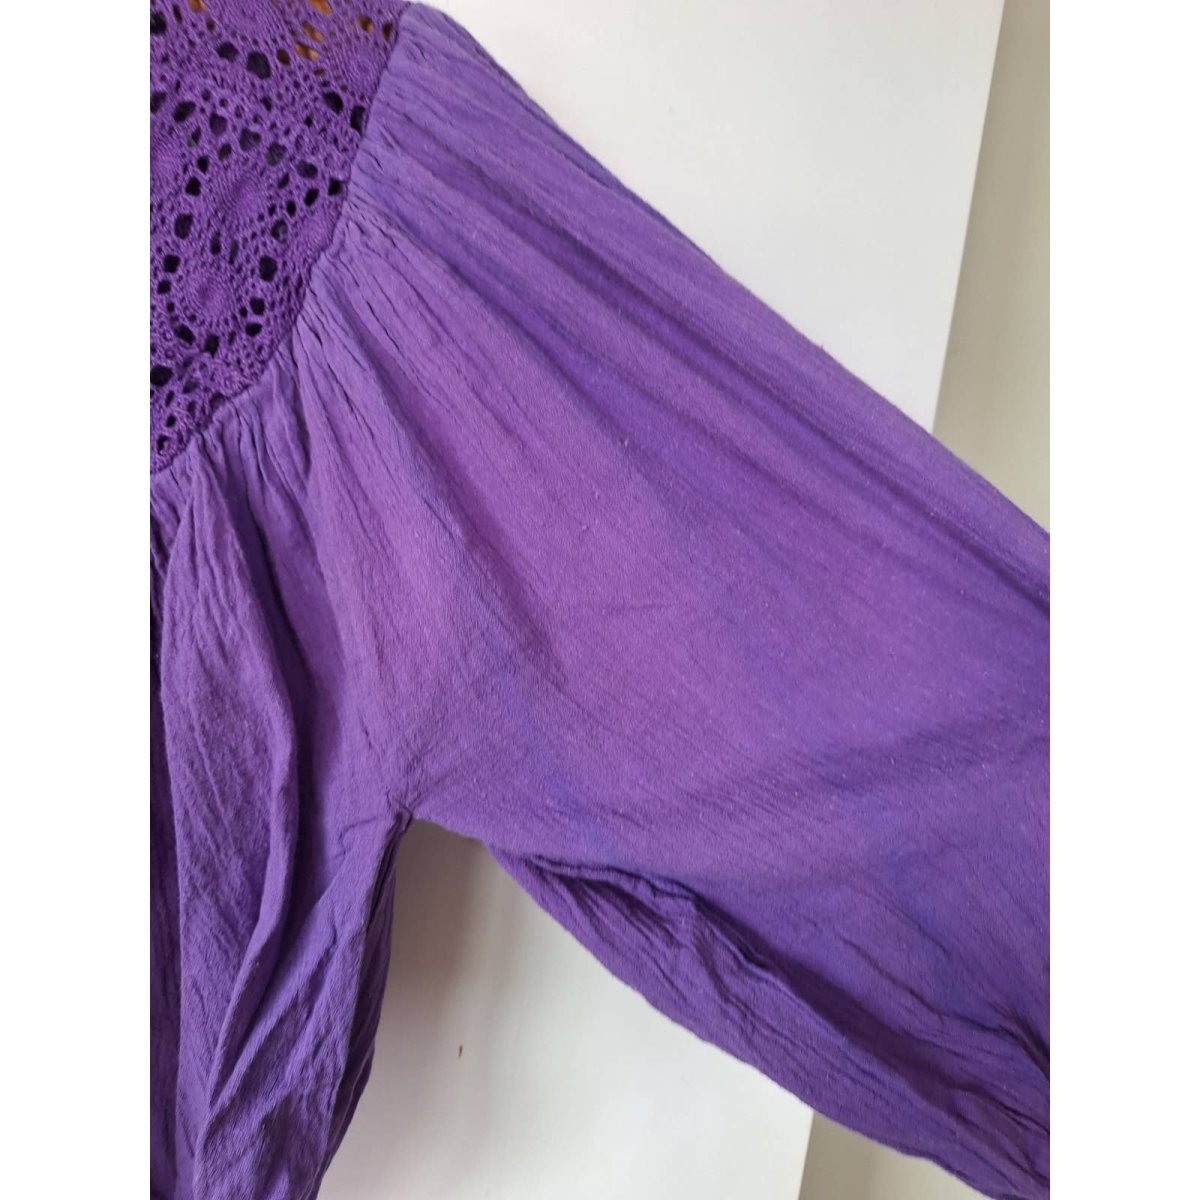 Vintage Purple Cotton Gauze Boho Skirt Cropped Blouse Set Women's Size L/1X 16/18 - themallvintage The Mall Vintage